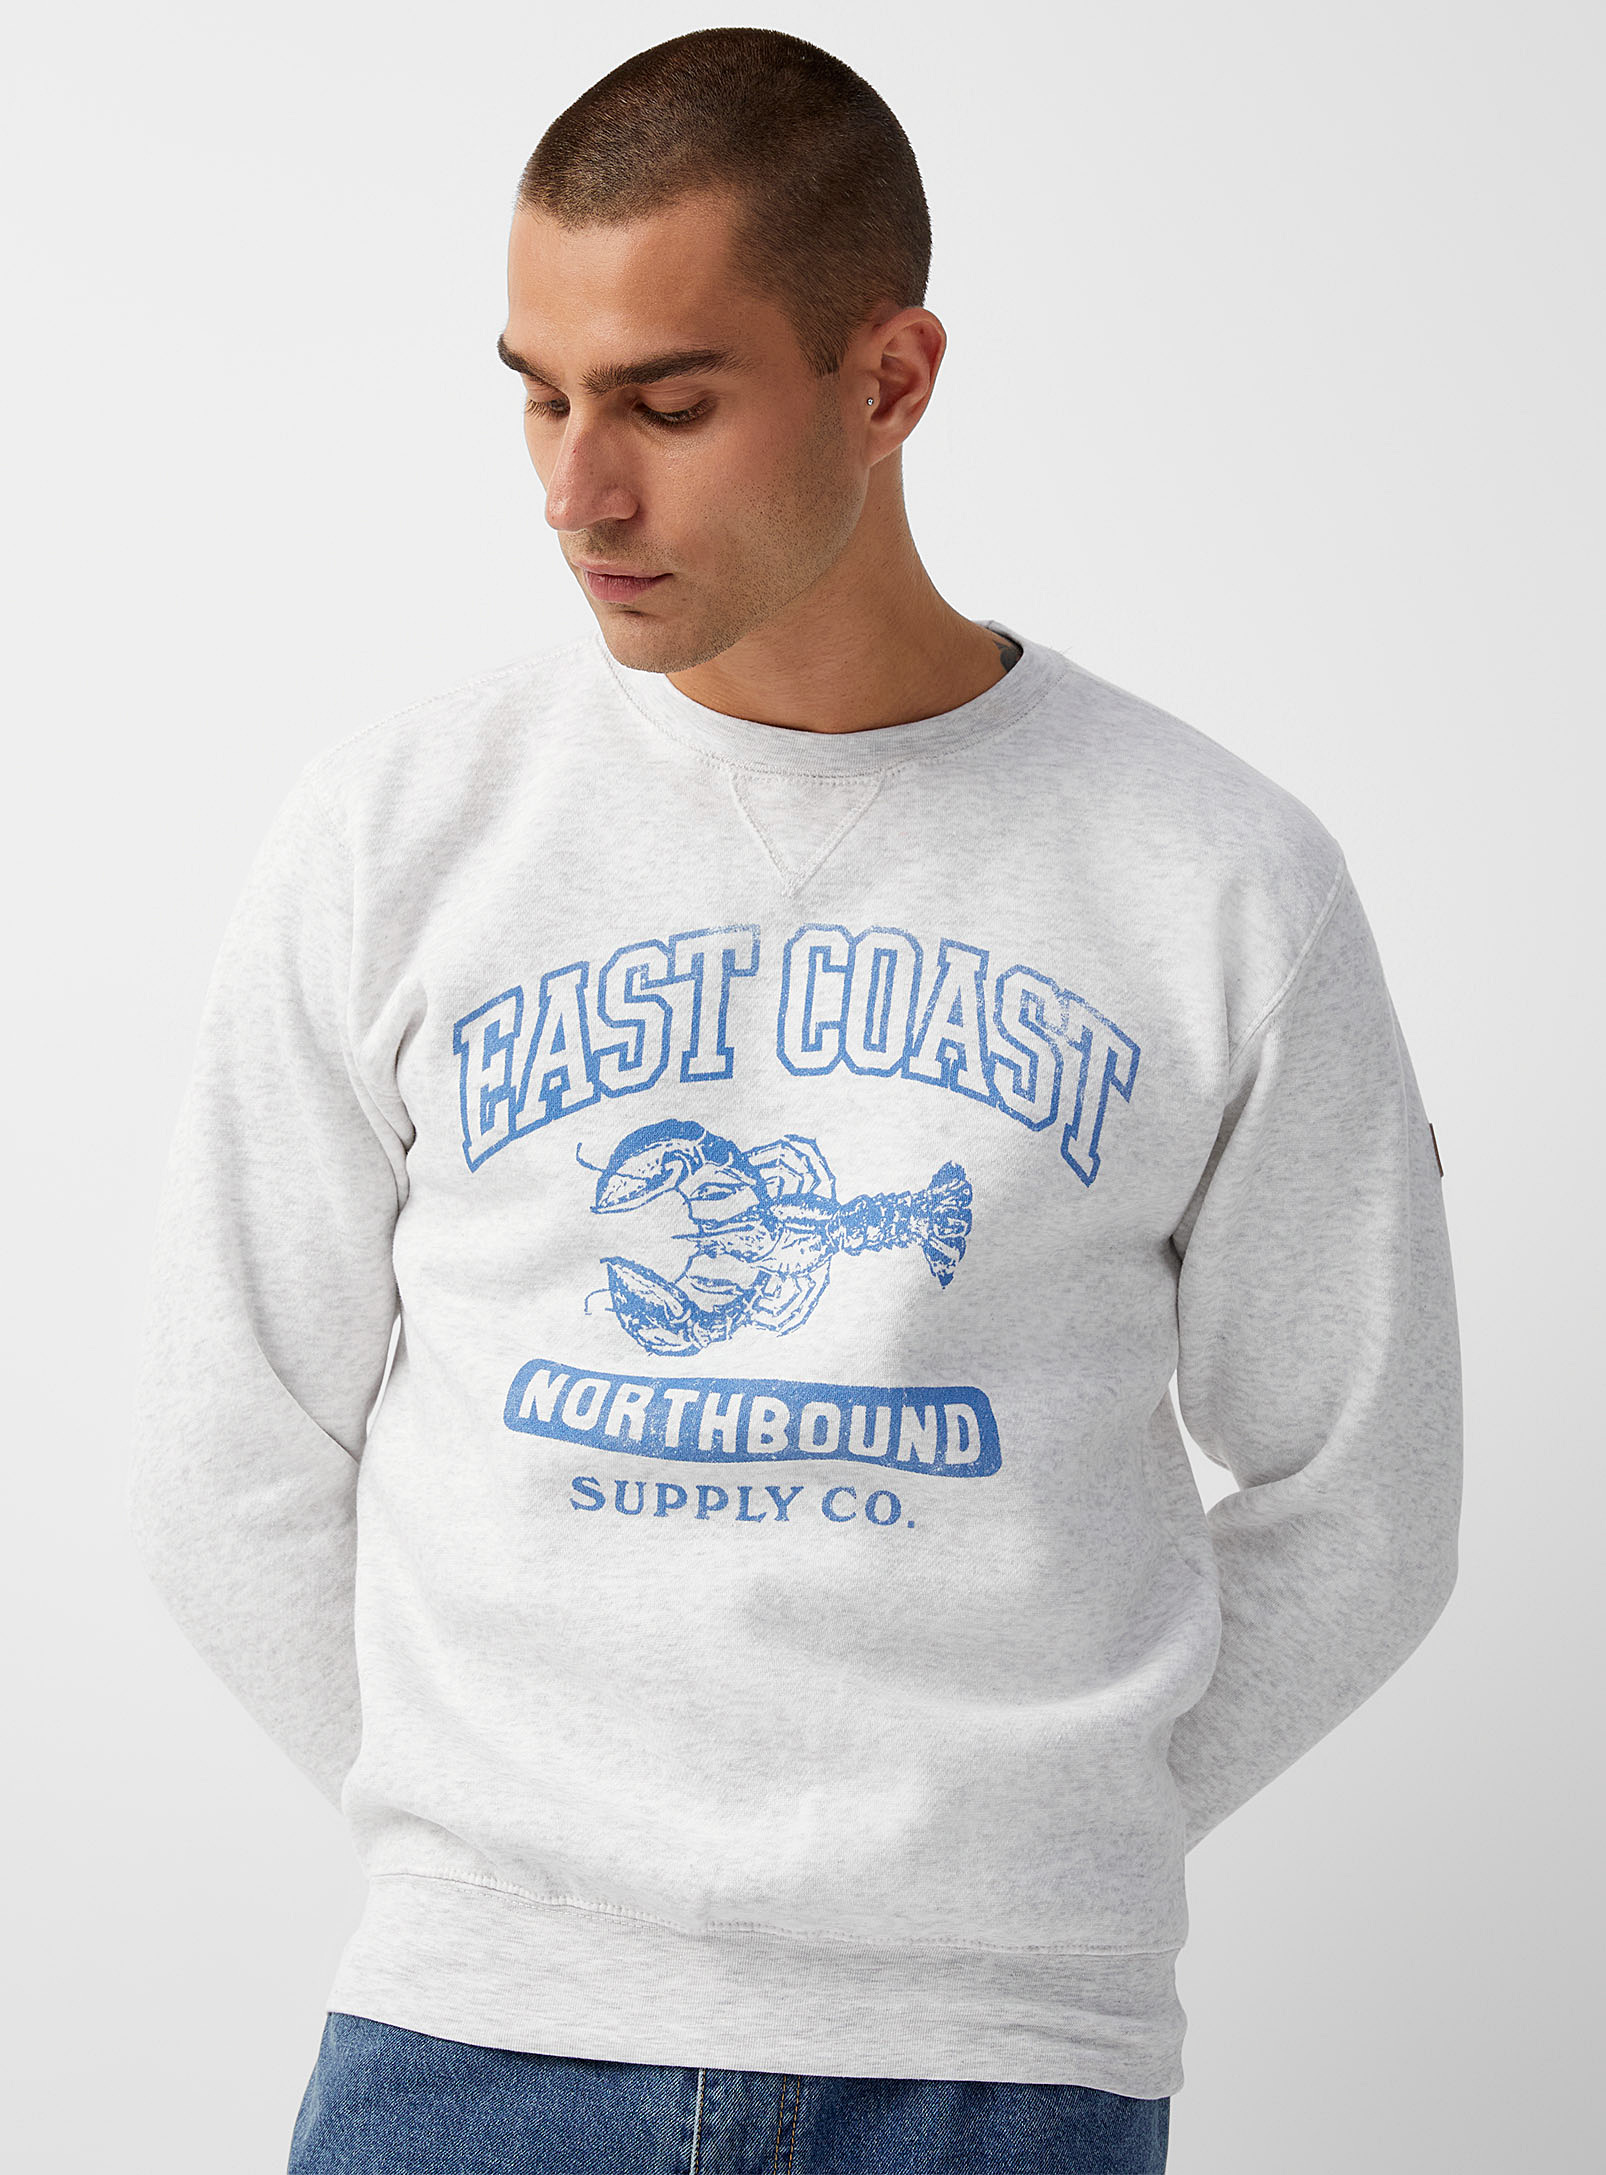 Northbound - Men's Canadian East Coast sweatshirt